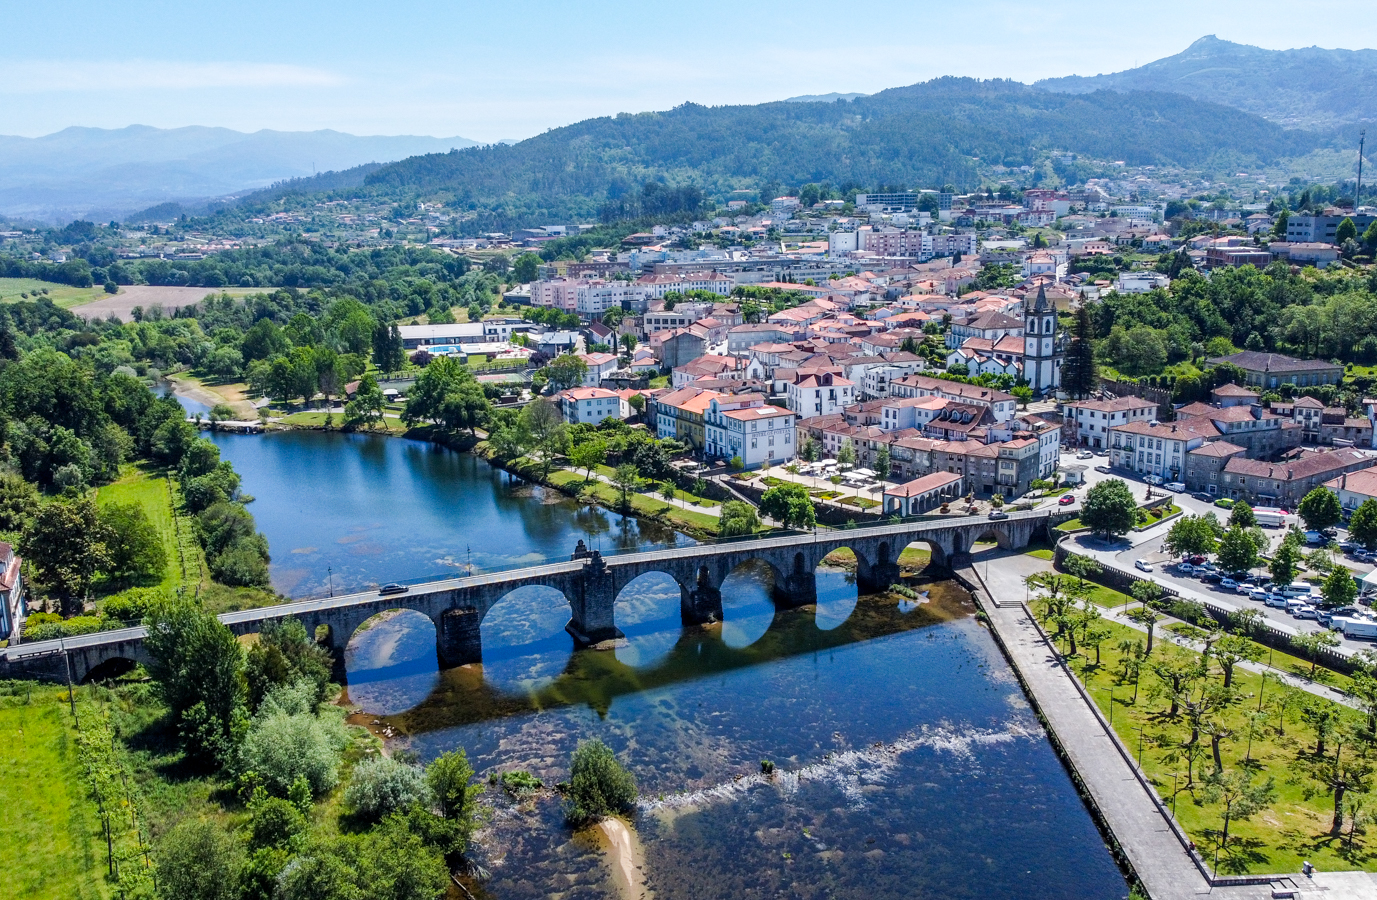 Visit Ponte da Barca on a day trip from Porto